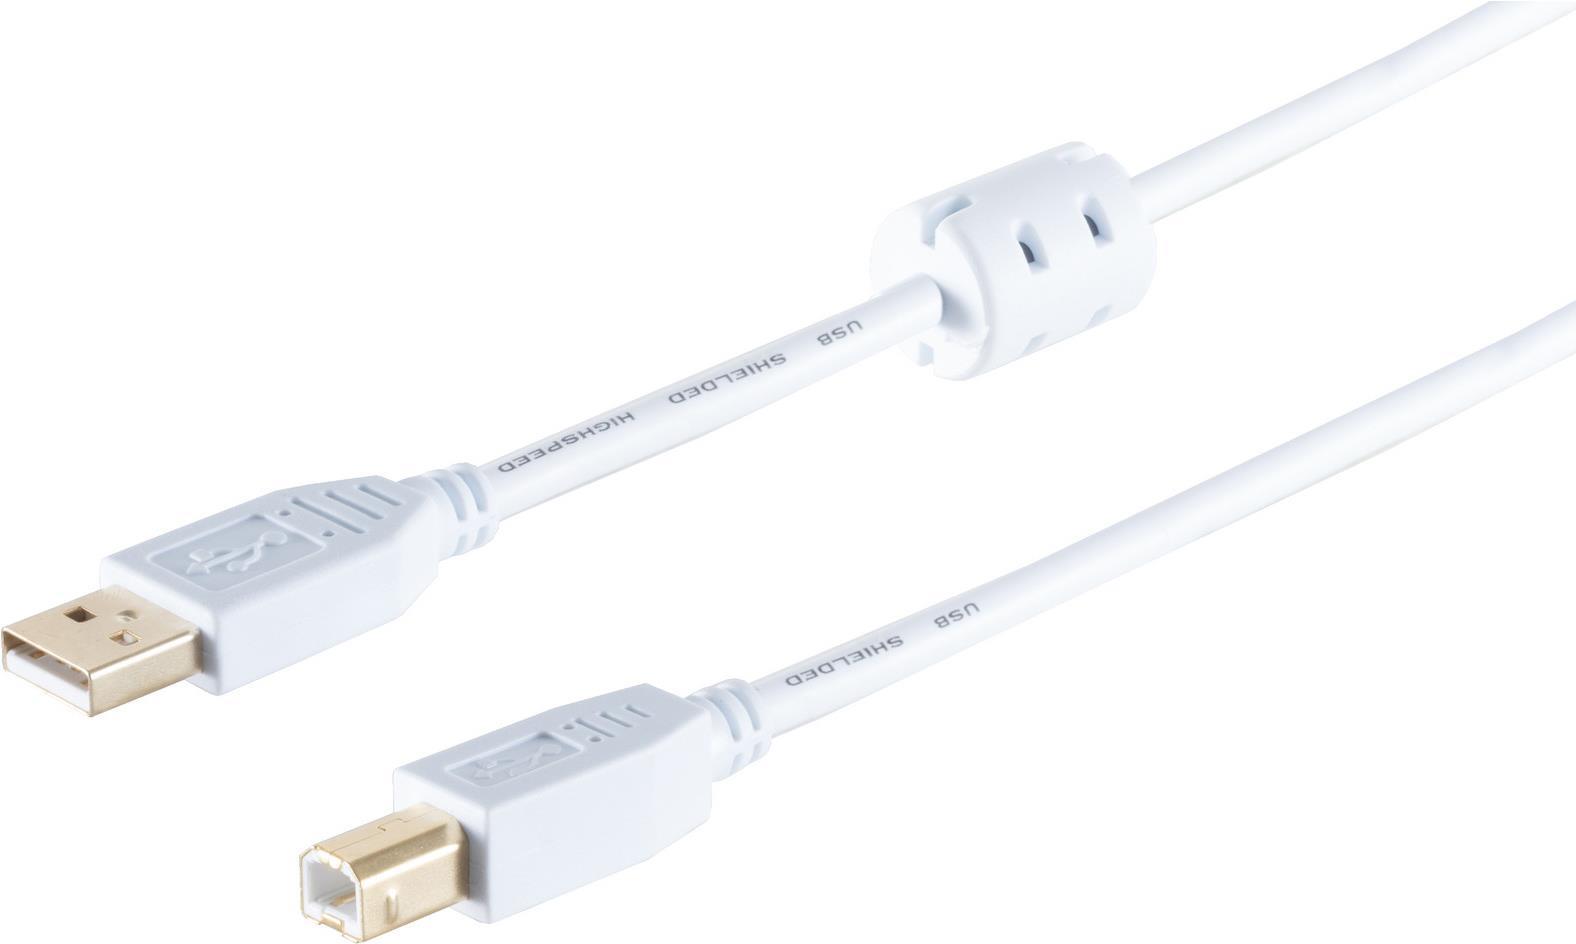 S-CONN S/CONN maximum connectivity USB High Speed 2.0 Kabel mit Ferrit, A/B Stecker, vergoldete Kont